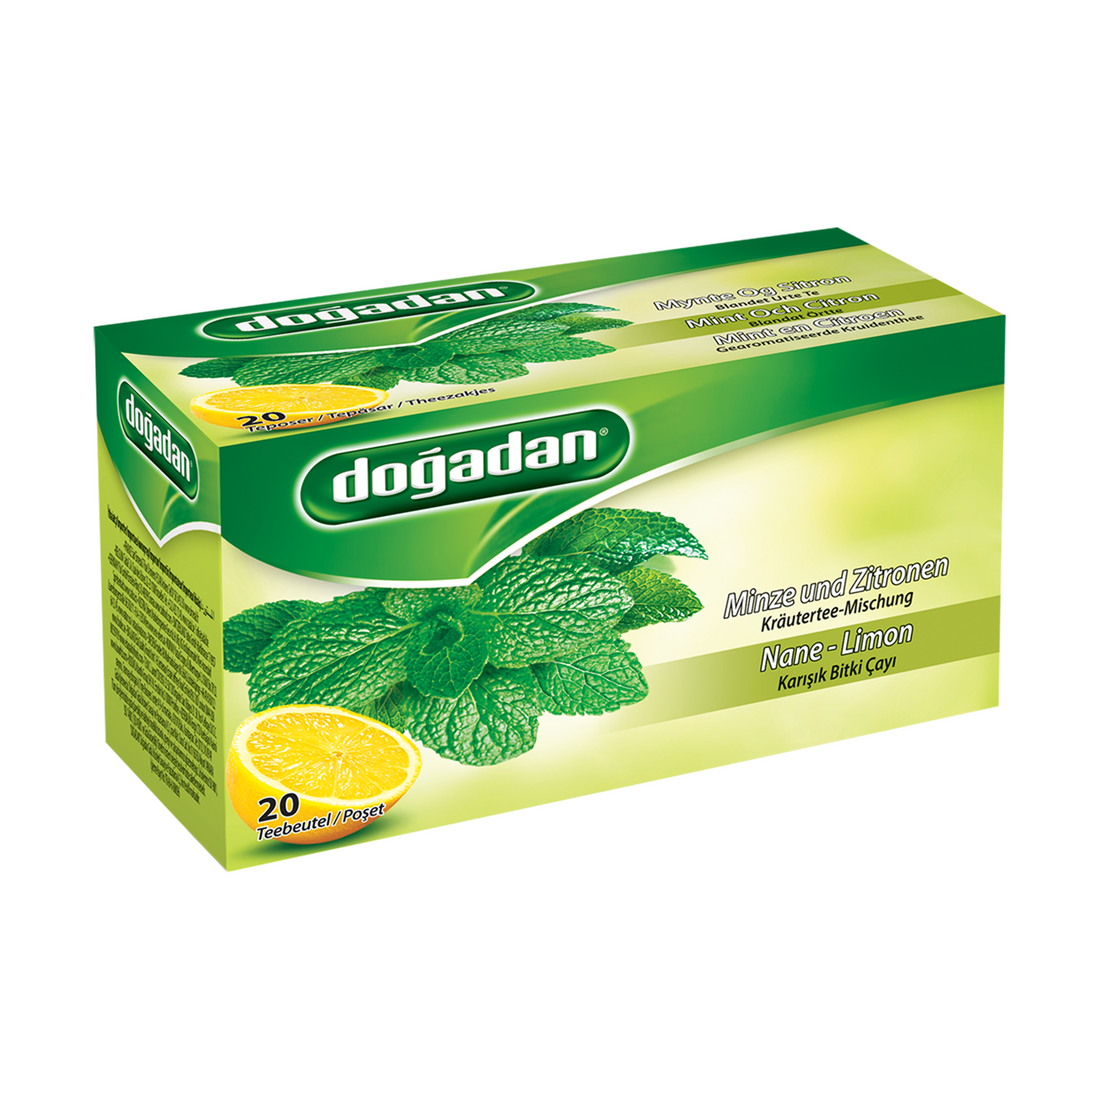 Dogadan Mint &amp; Lemon Herbal Infusion 2g×20P | Dogadan Nane-Limon Karisik Bitki Cayi | Mint snd Lemon Herbal Infusion